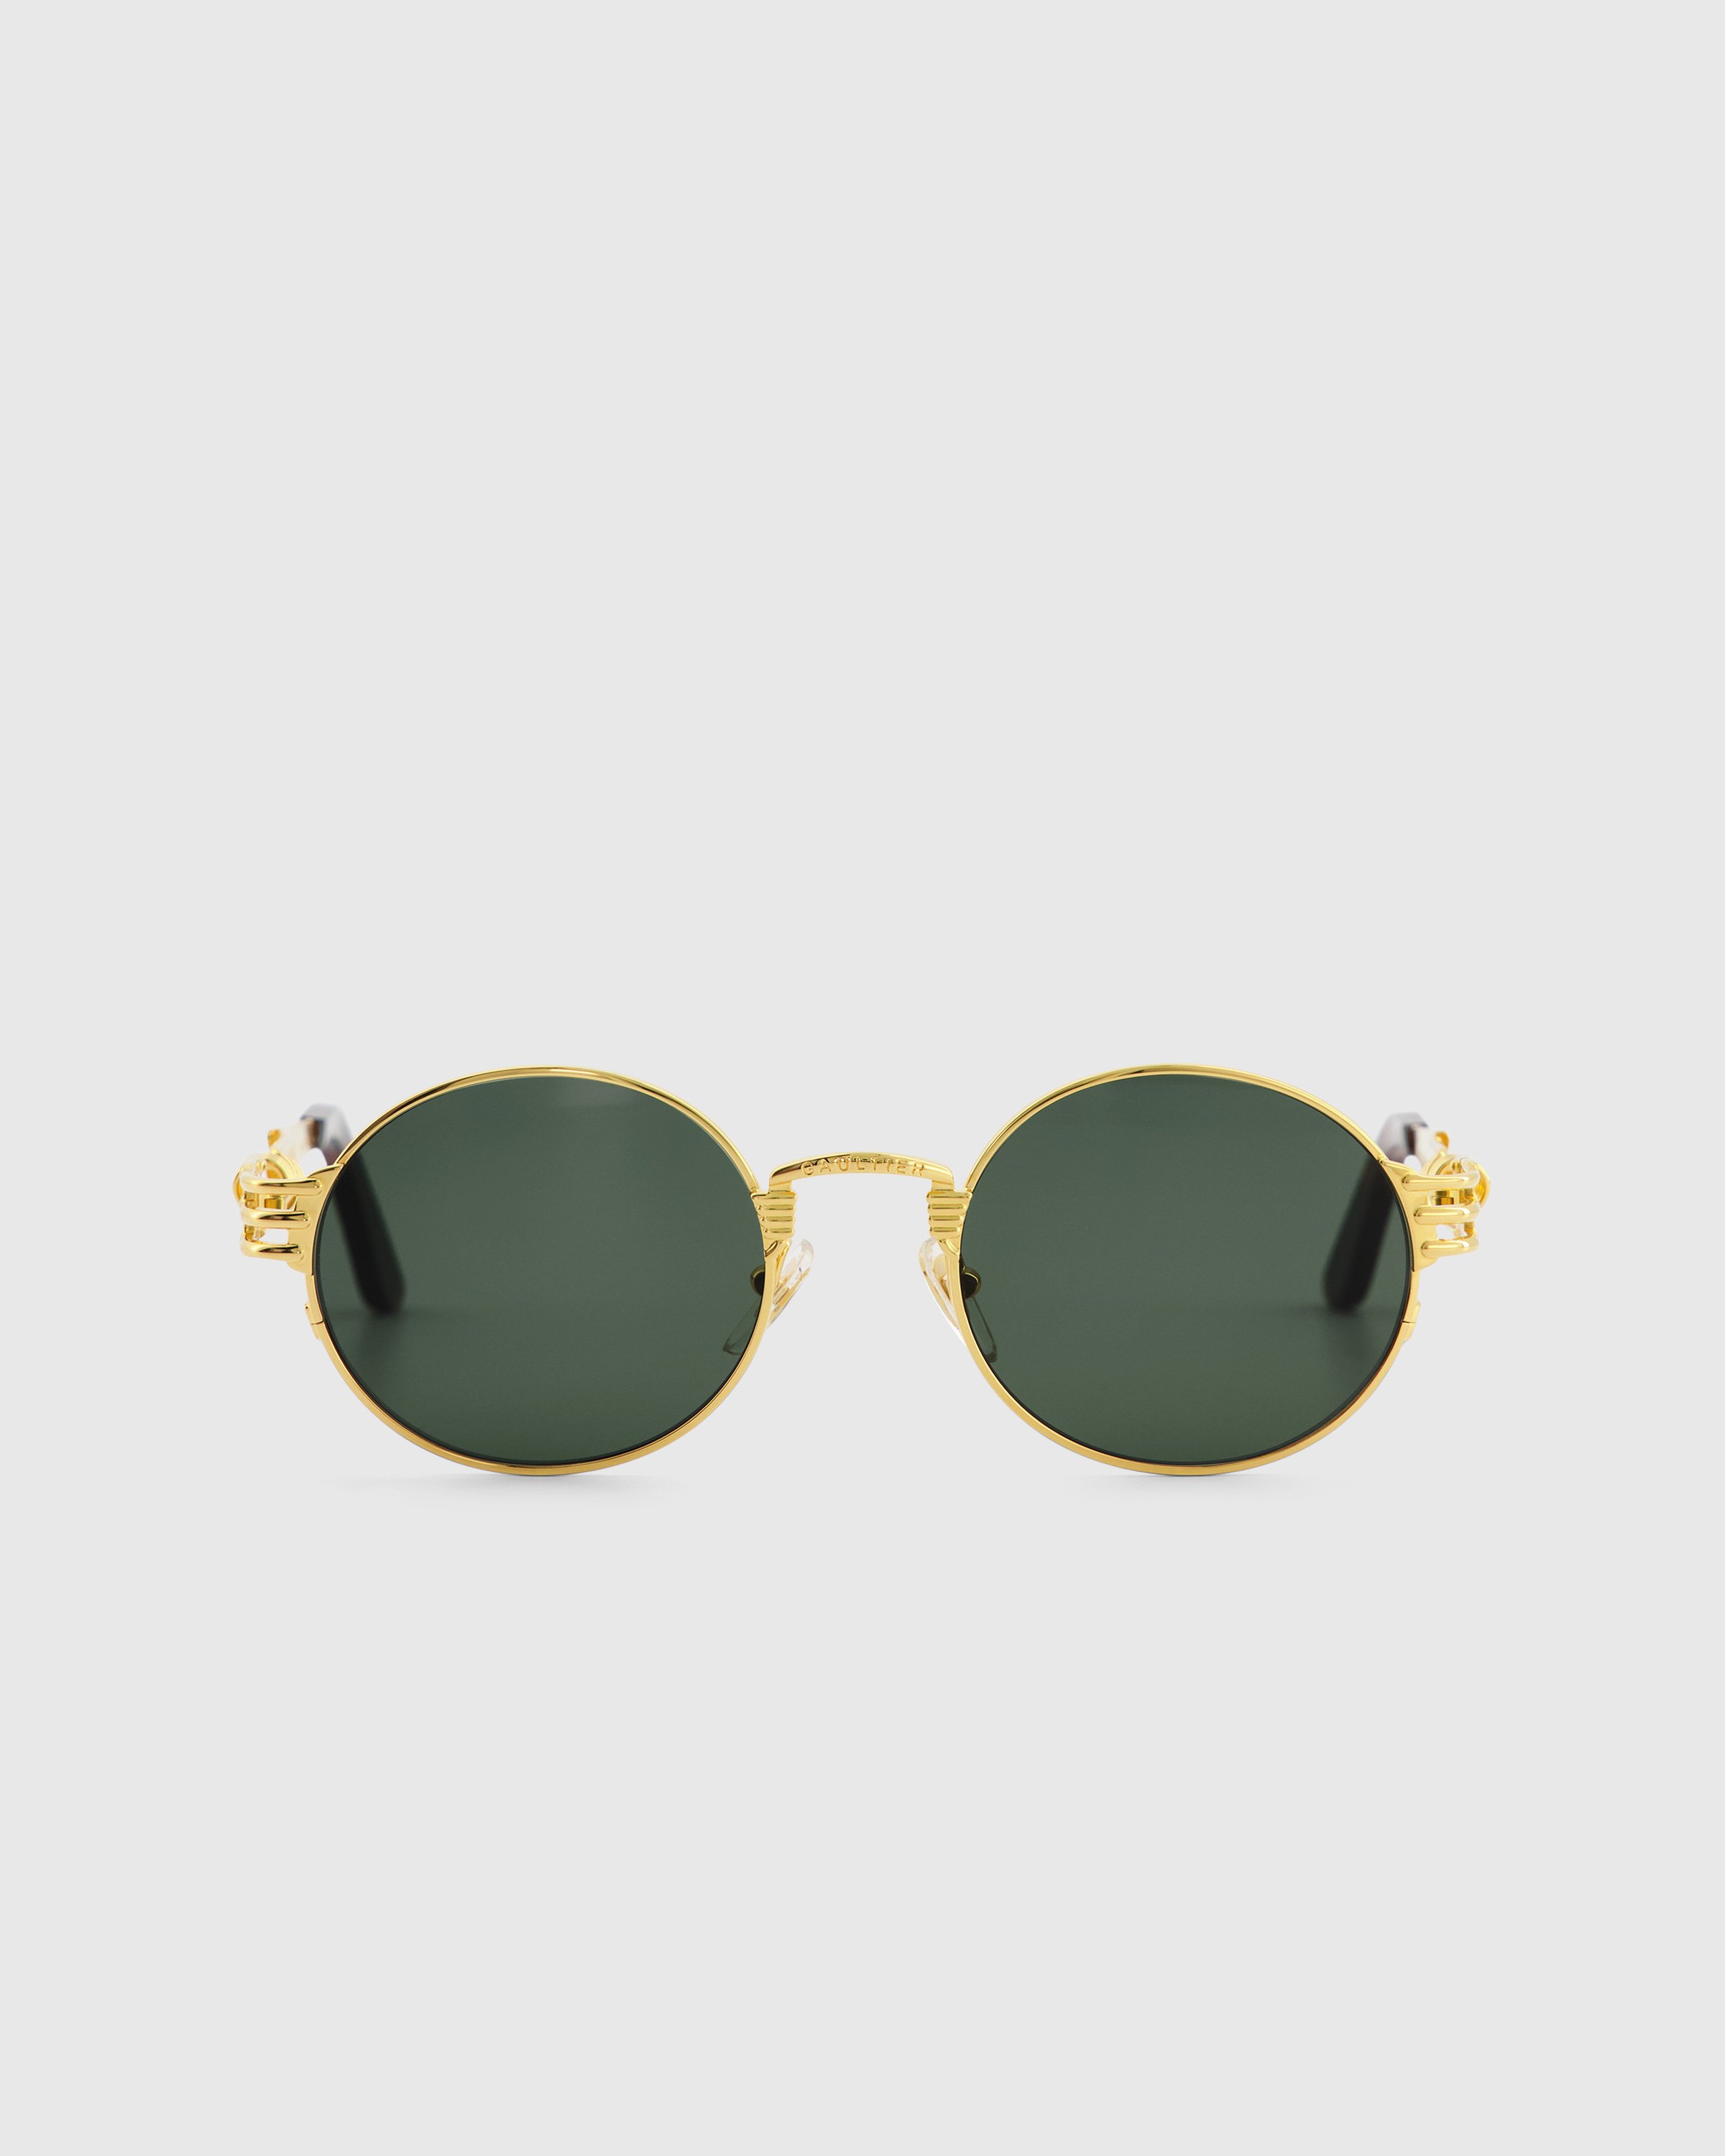 Jean Paul Gaultier x Burna Boy - 56-6106 Double Resort Sunglasses Yellow - Accessories - Yellow - Image 1